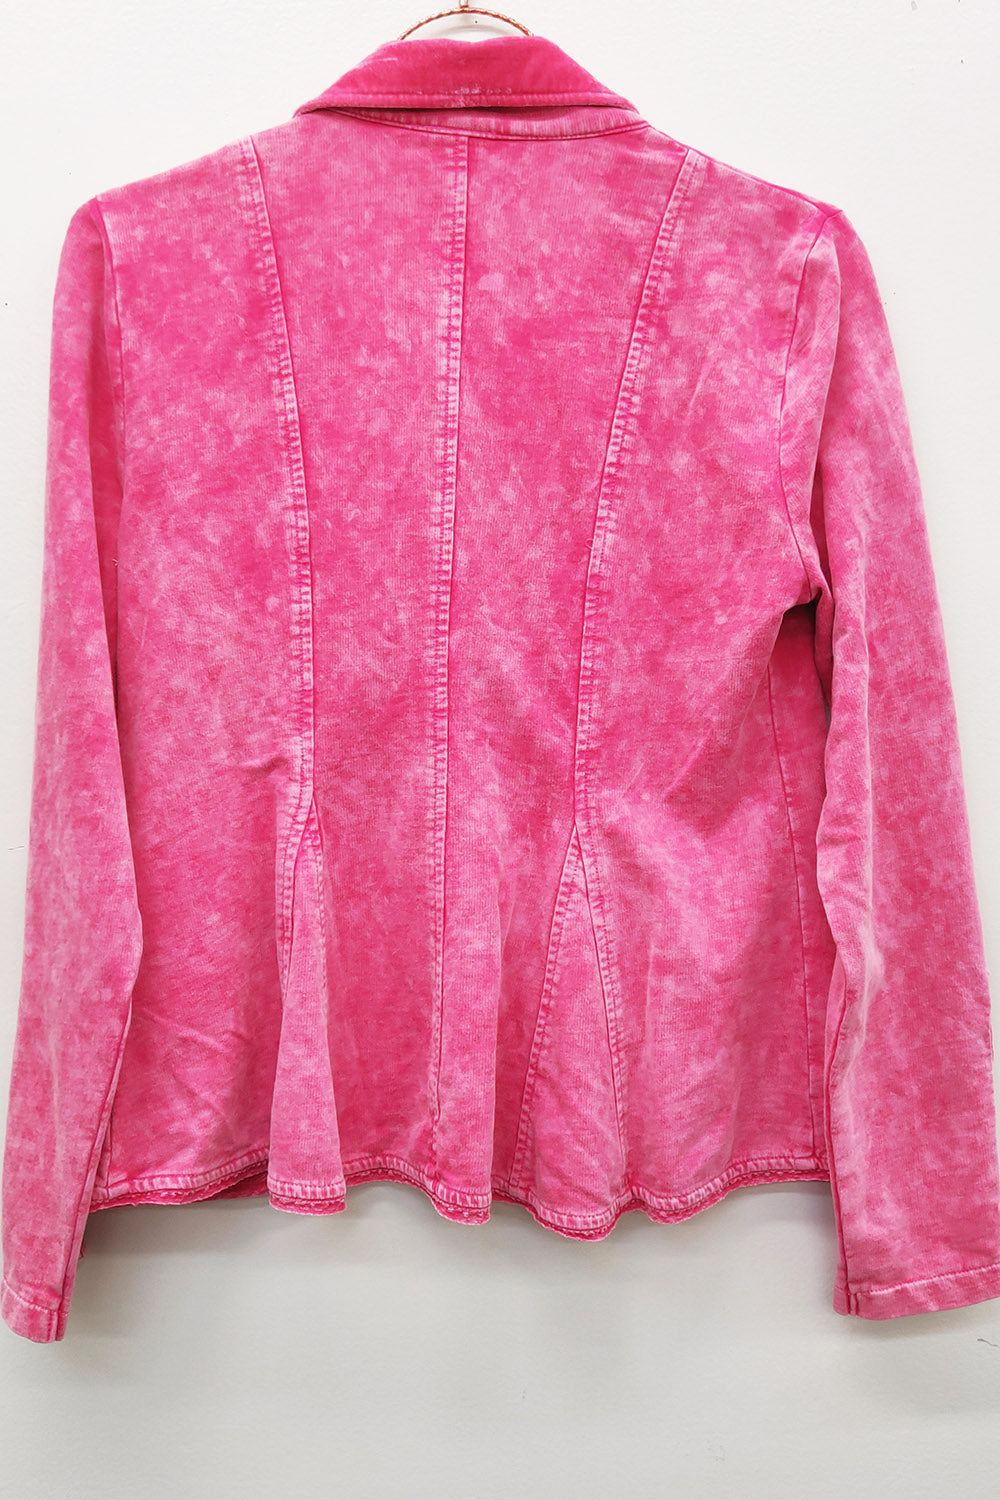 Rose Pink Jacket by Aratta